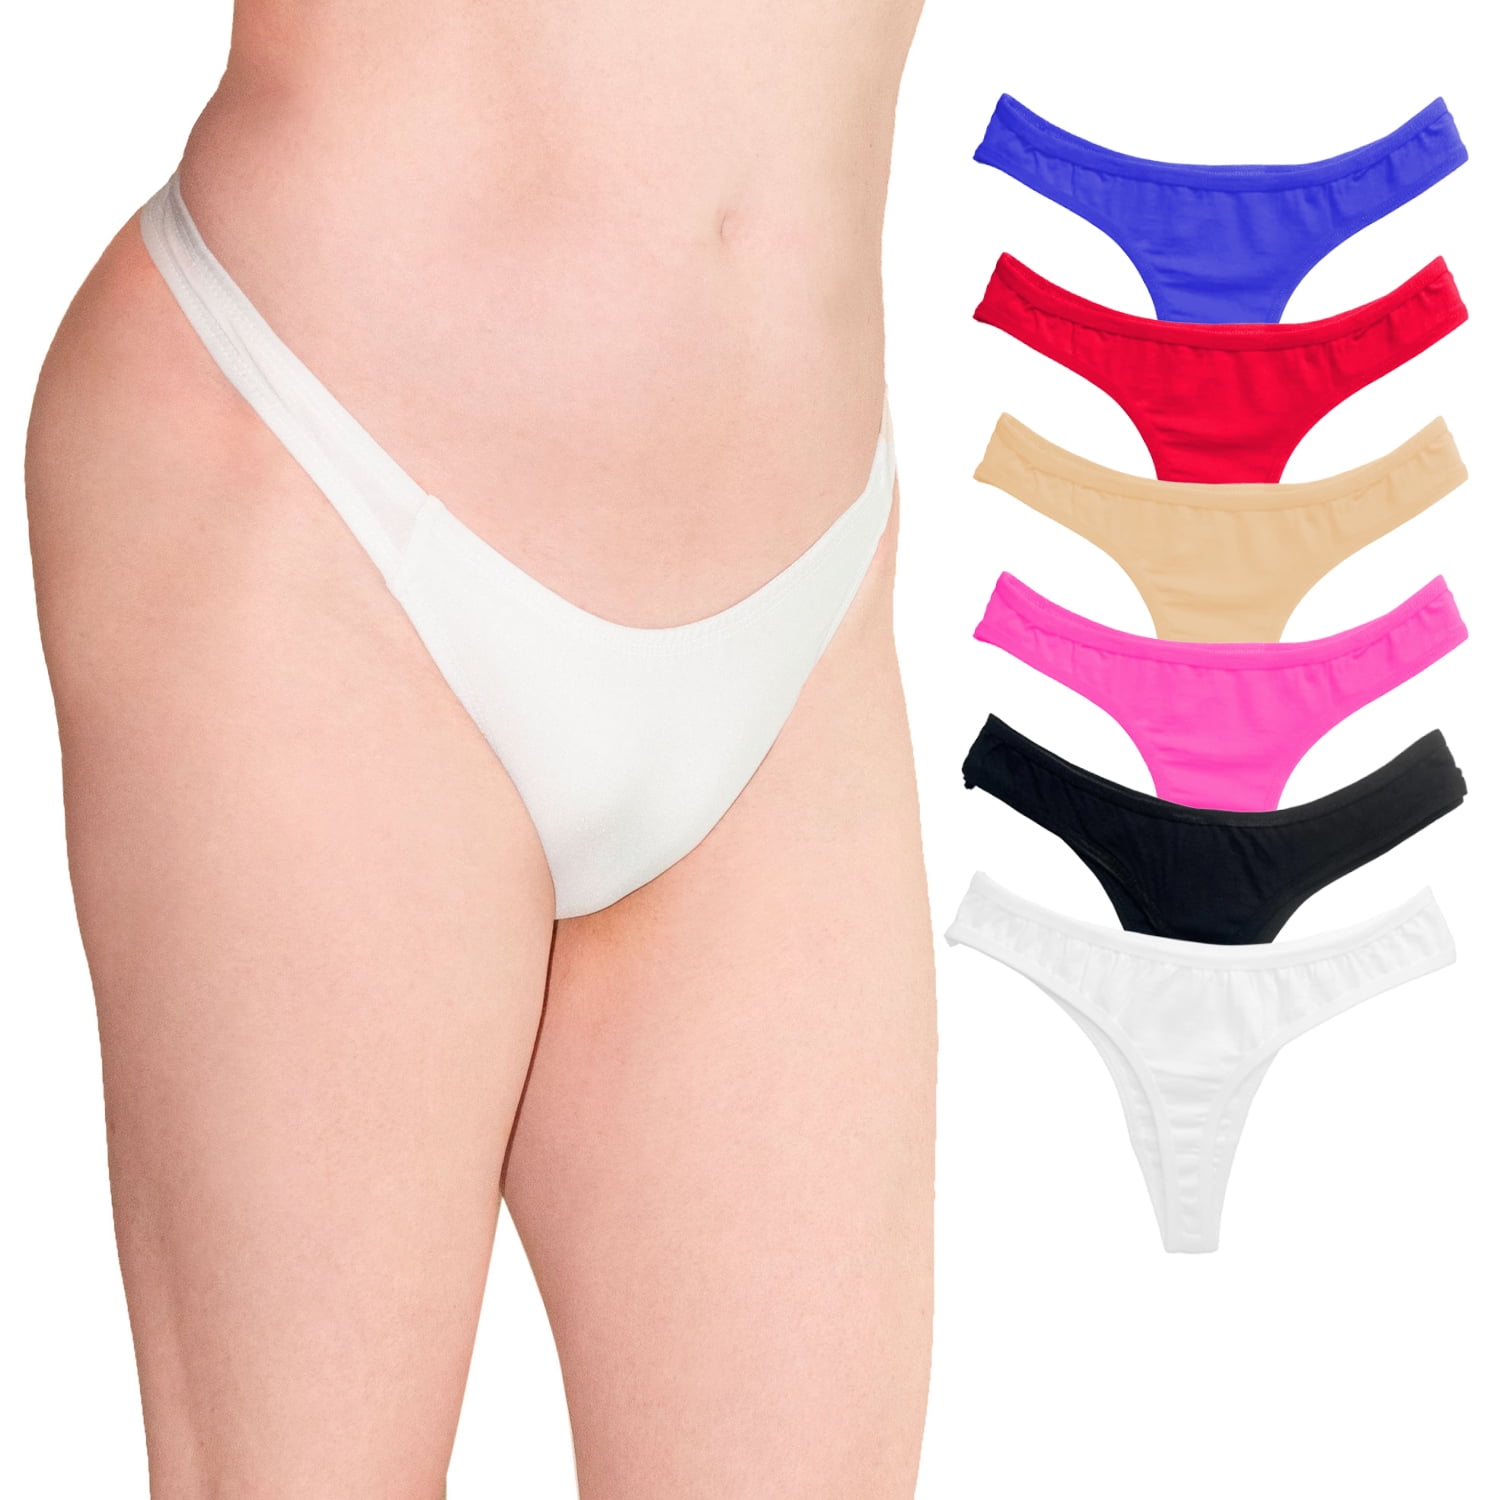 Tucking Gaff Panties For Men and Trans-Women, Thong-Style Beige Medium 